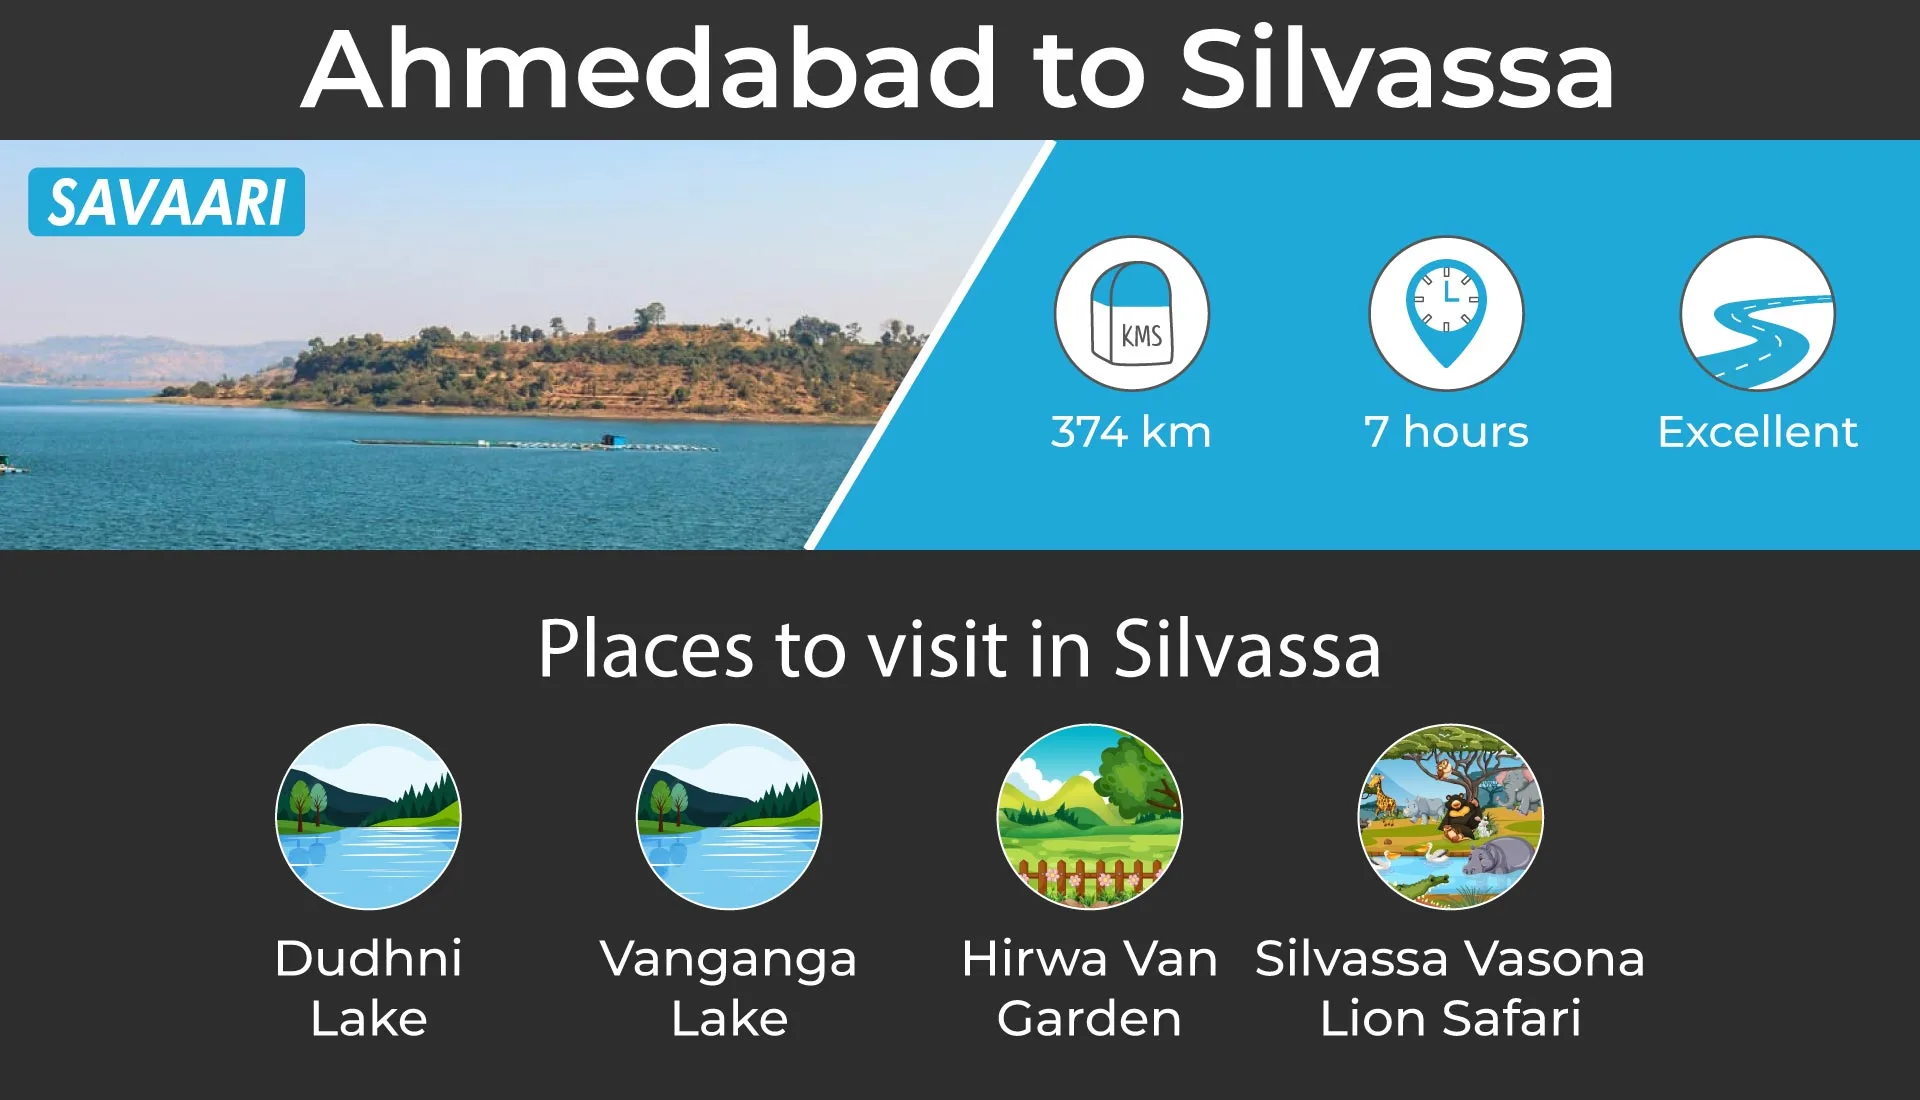 Ahmedabad to Silvassa by road